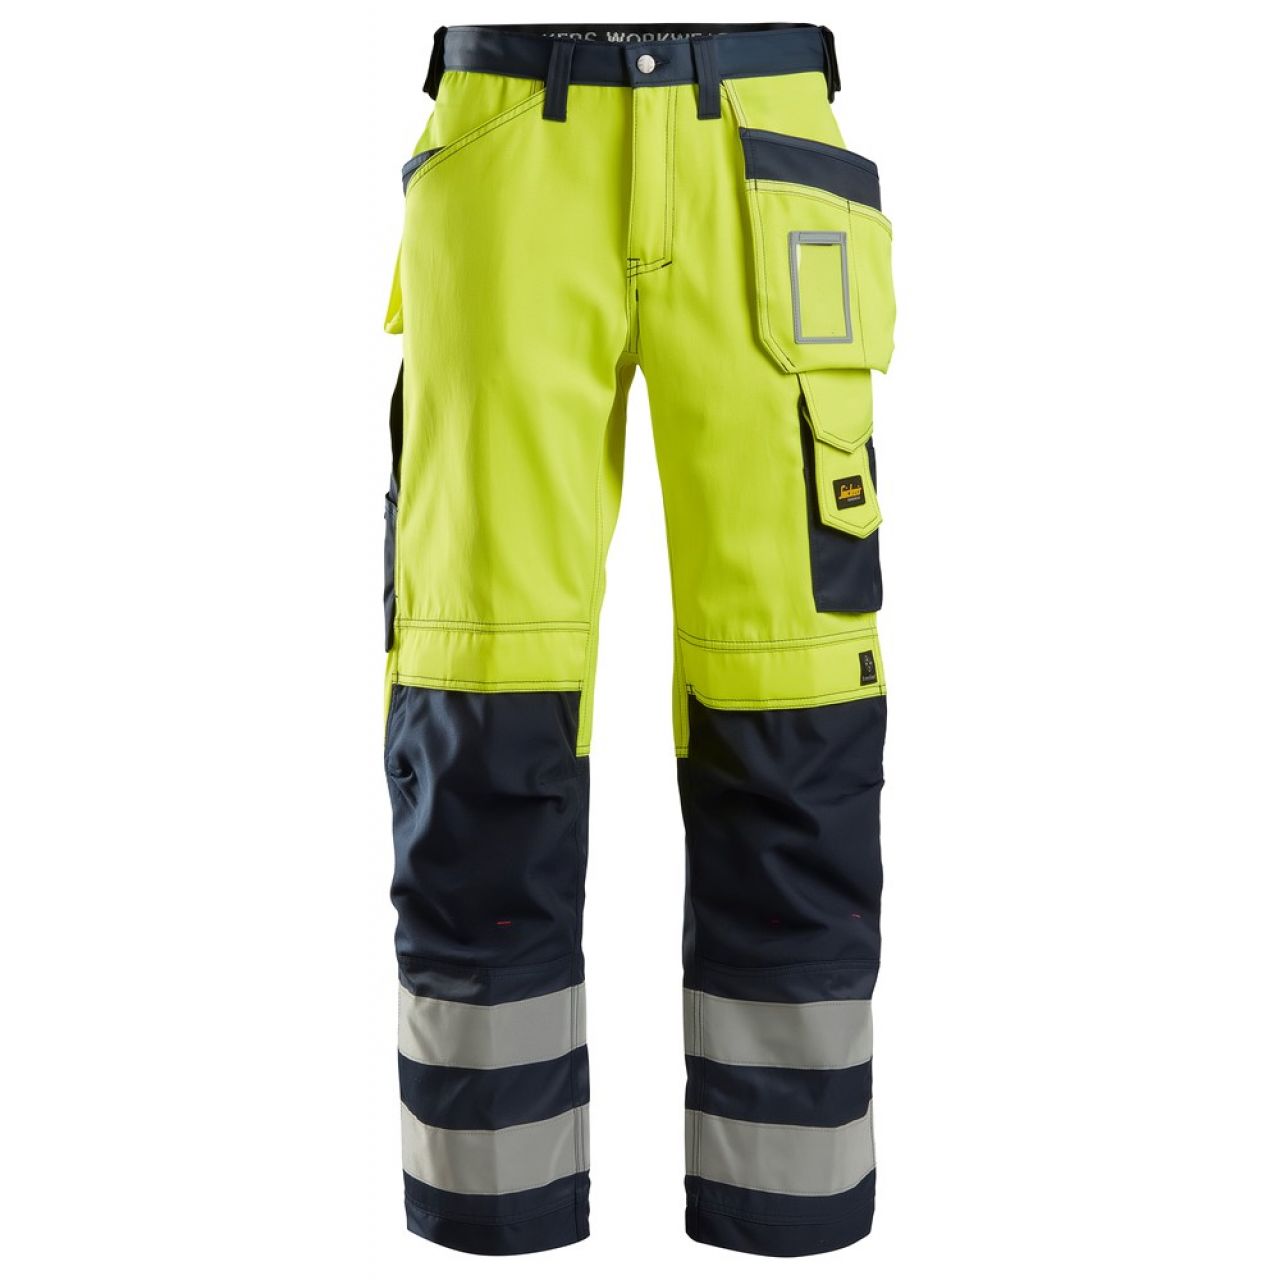 3233 Pantalones largos de trabajo de alta visibilidad clase 2 con bolsillos flotantes amarillo-azul marino talla 152